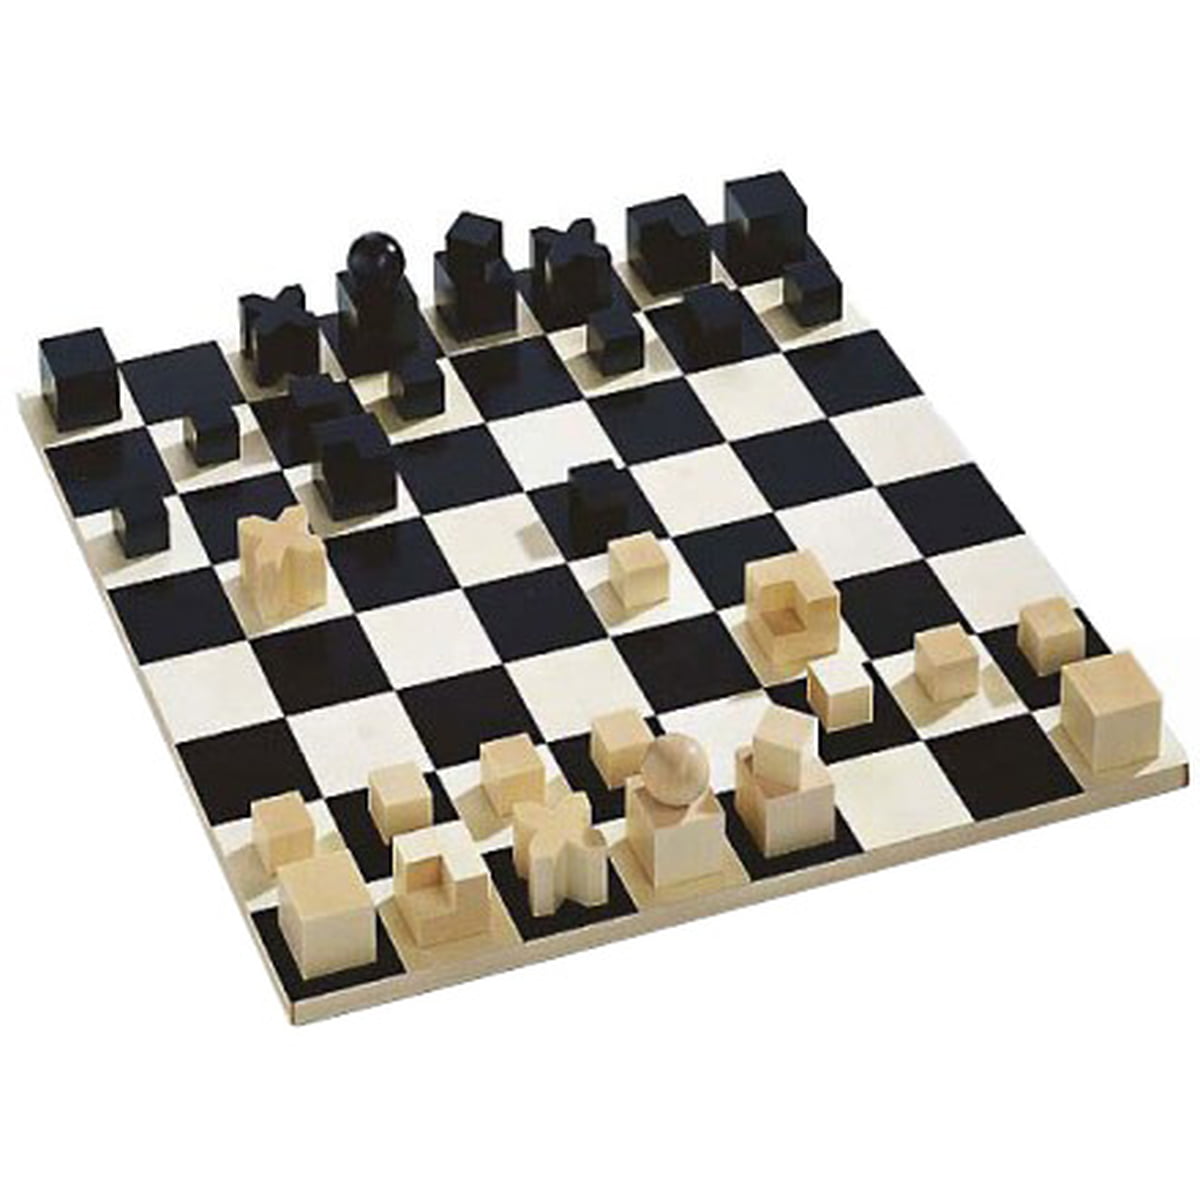 Schach Chess